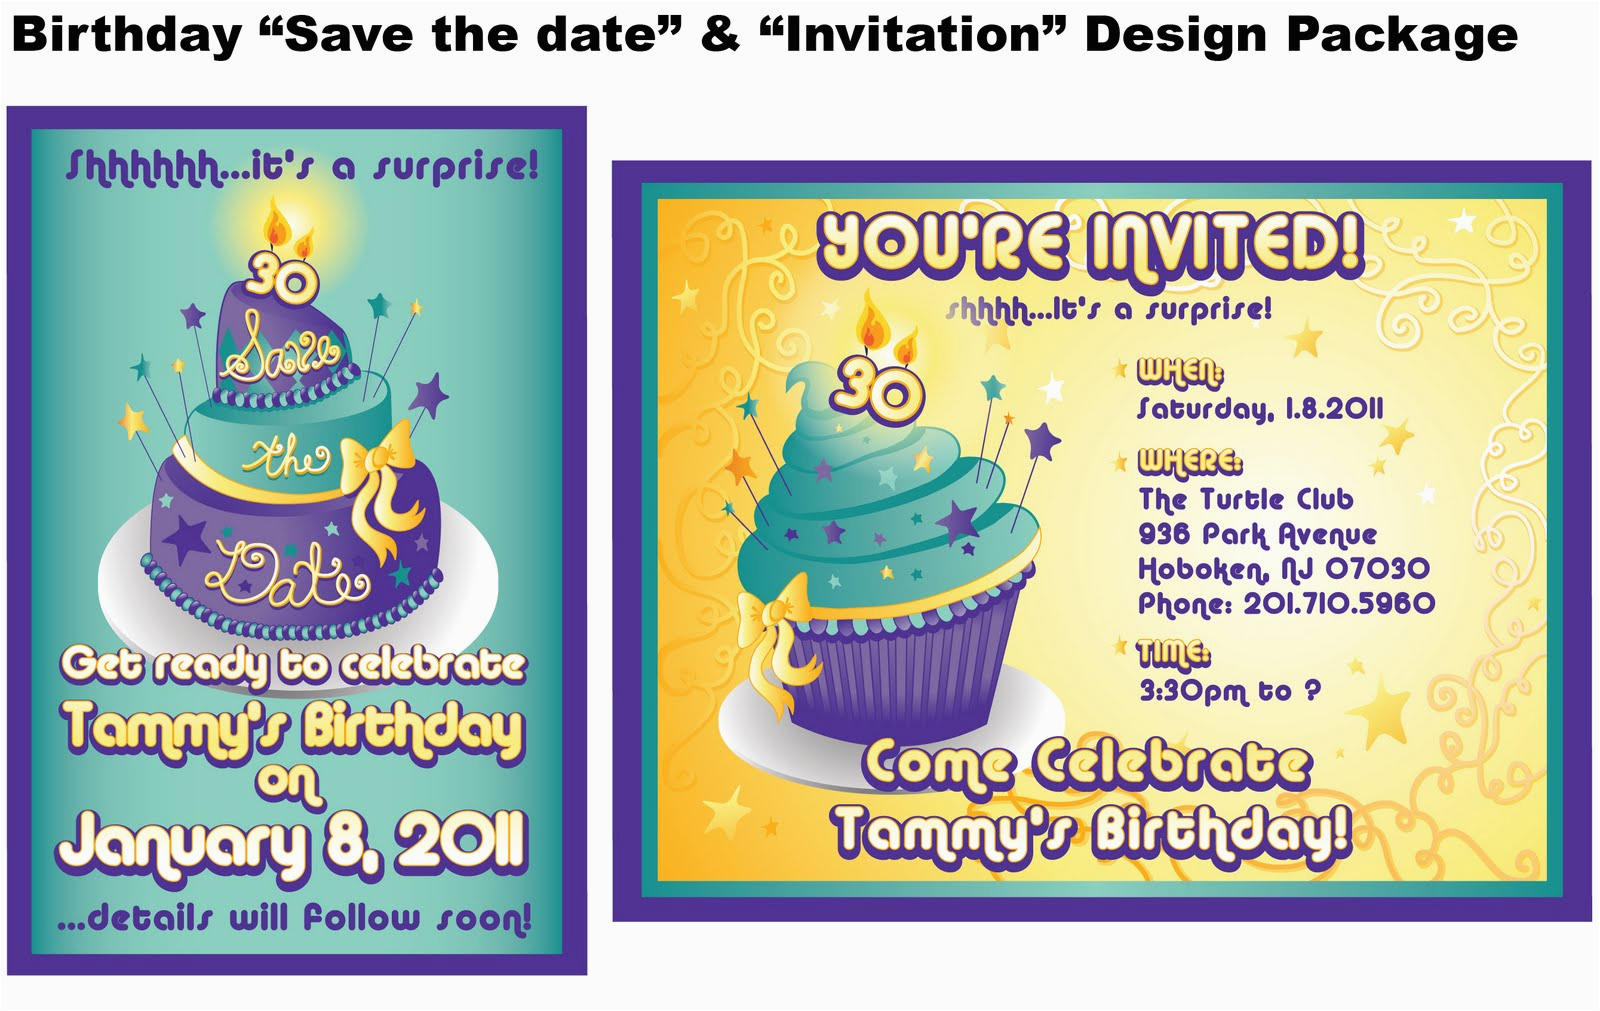 ts birthday save date invitation design